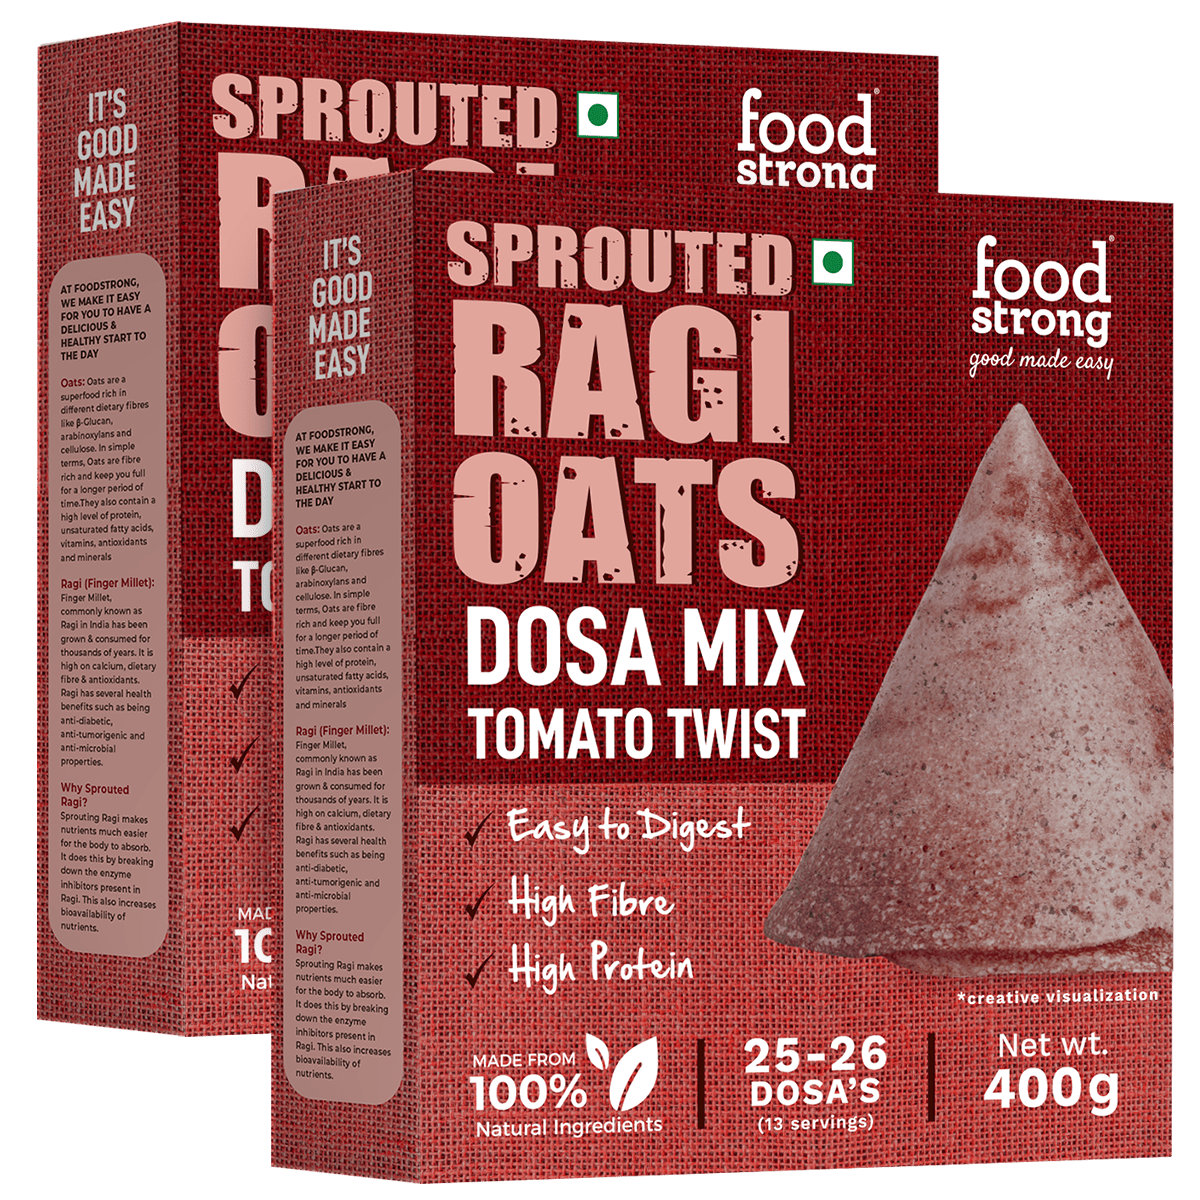 
                  
                    Sprouted Ragi & Oats Dosa Mix - Tomato Twist
                  
                